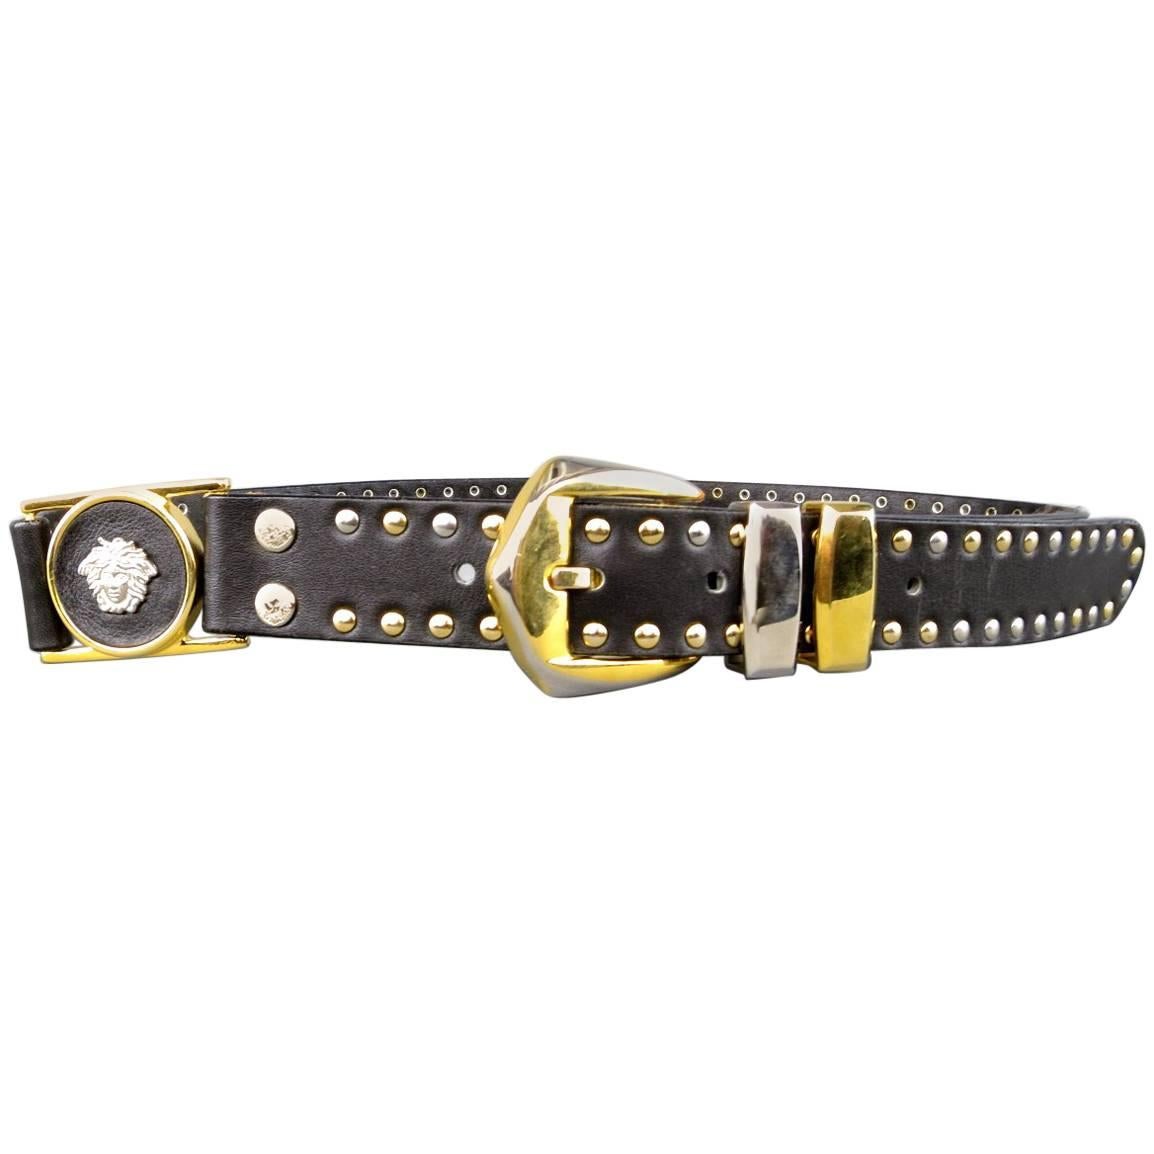 GIANNI VERSACE Size 30 Black Gold & Silver Medusa Studded Leather Belt